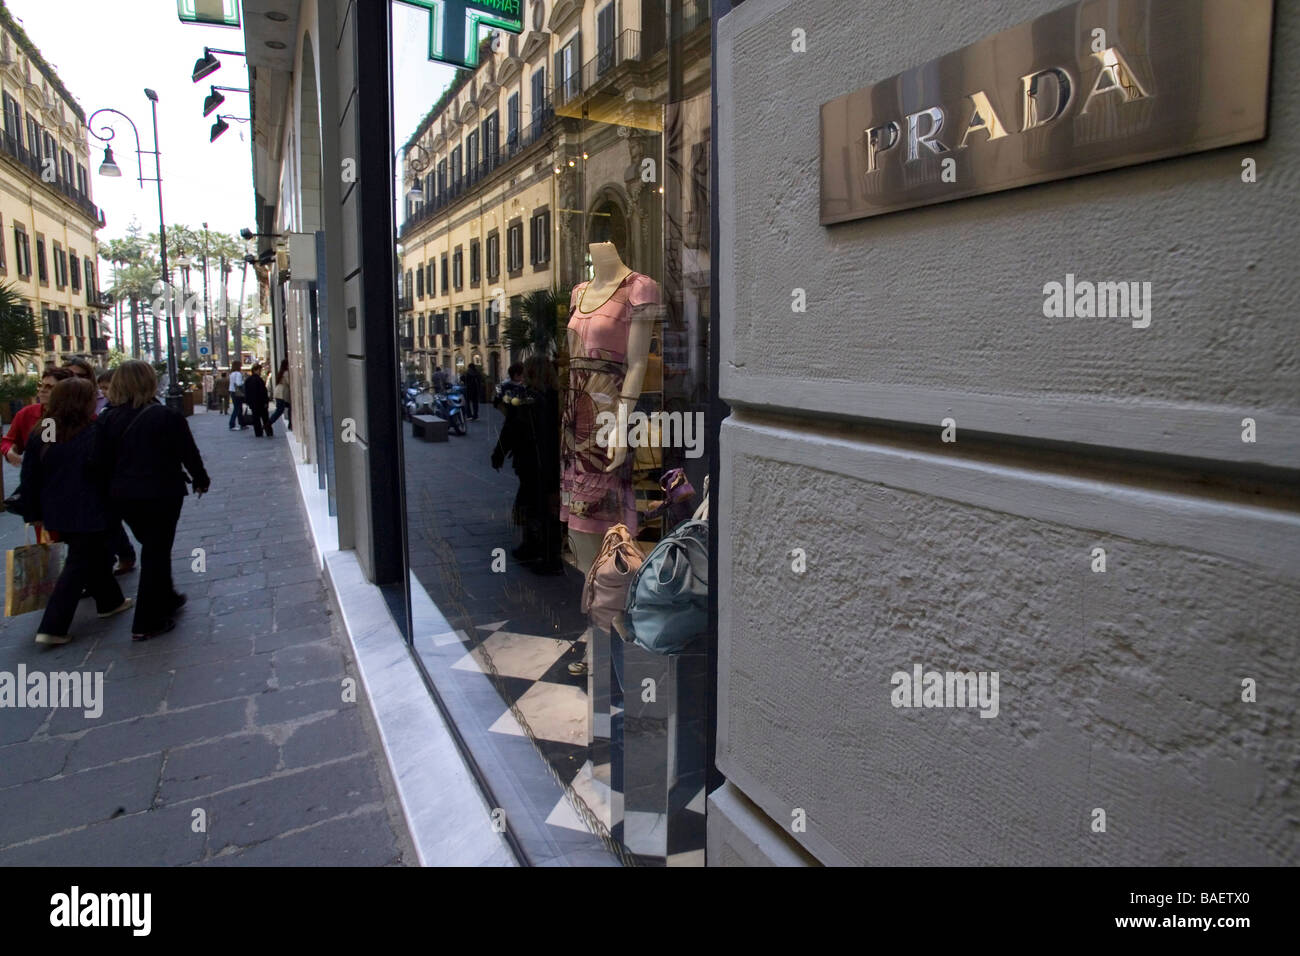 Boutique Prada, Via Calabritto, Napoli, campania, Italy Foto stock - Alamy